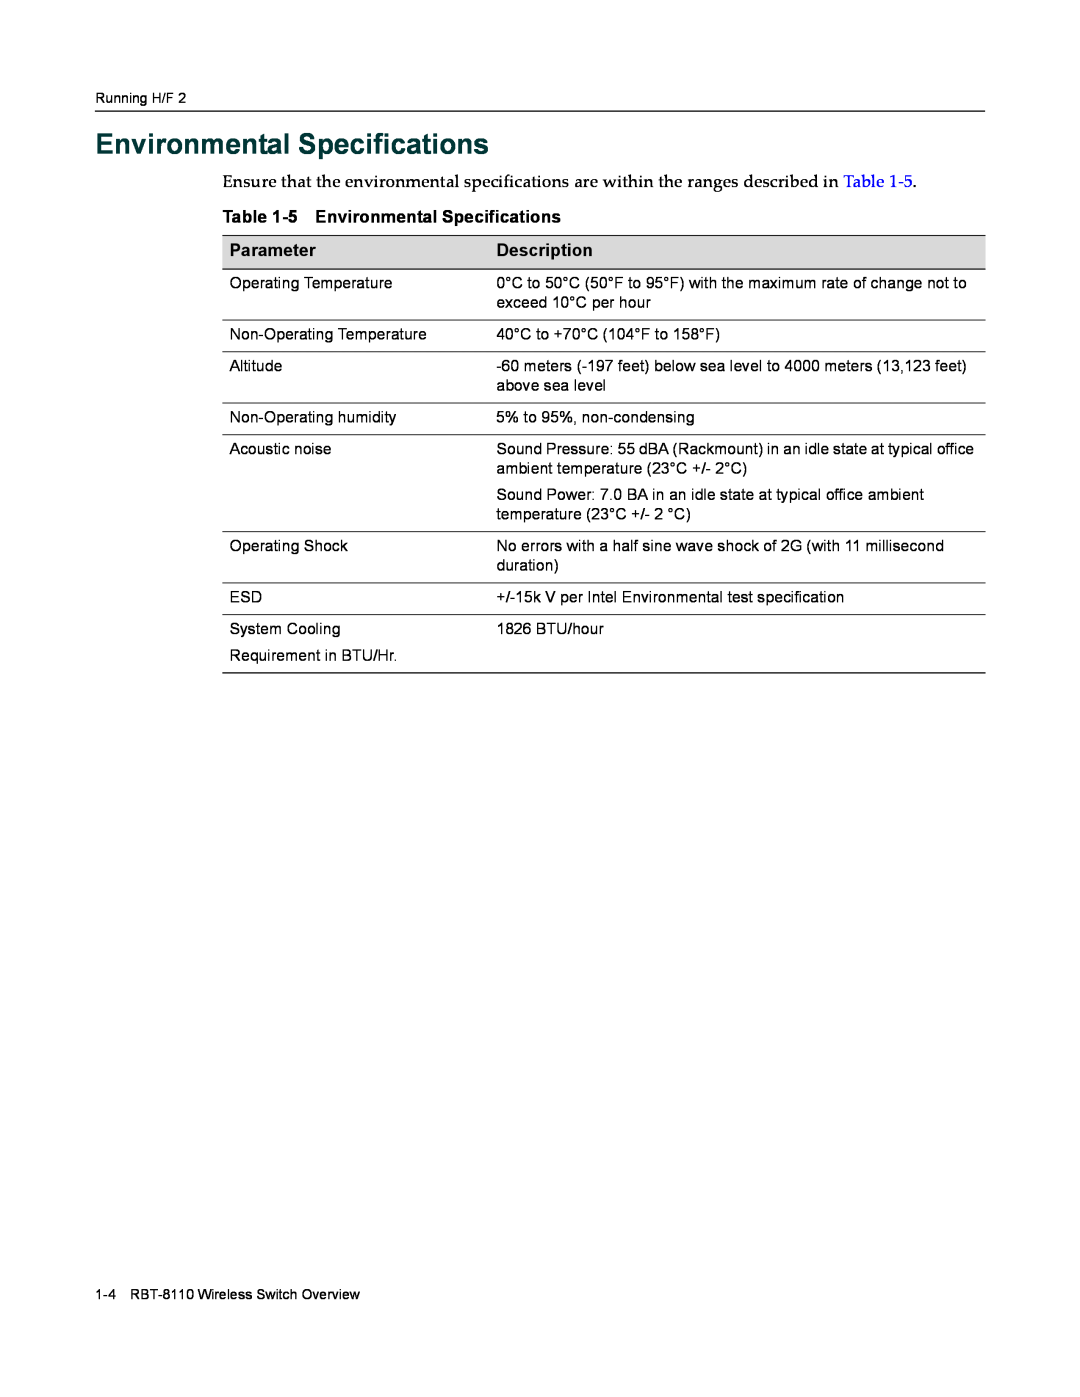 Enterasys Networks RBT-8110 manual 5 Environmental Specifications, Parameter, Description 